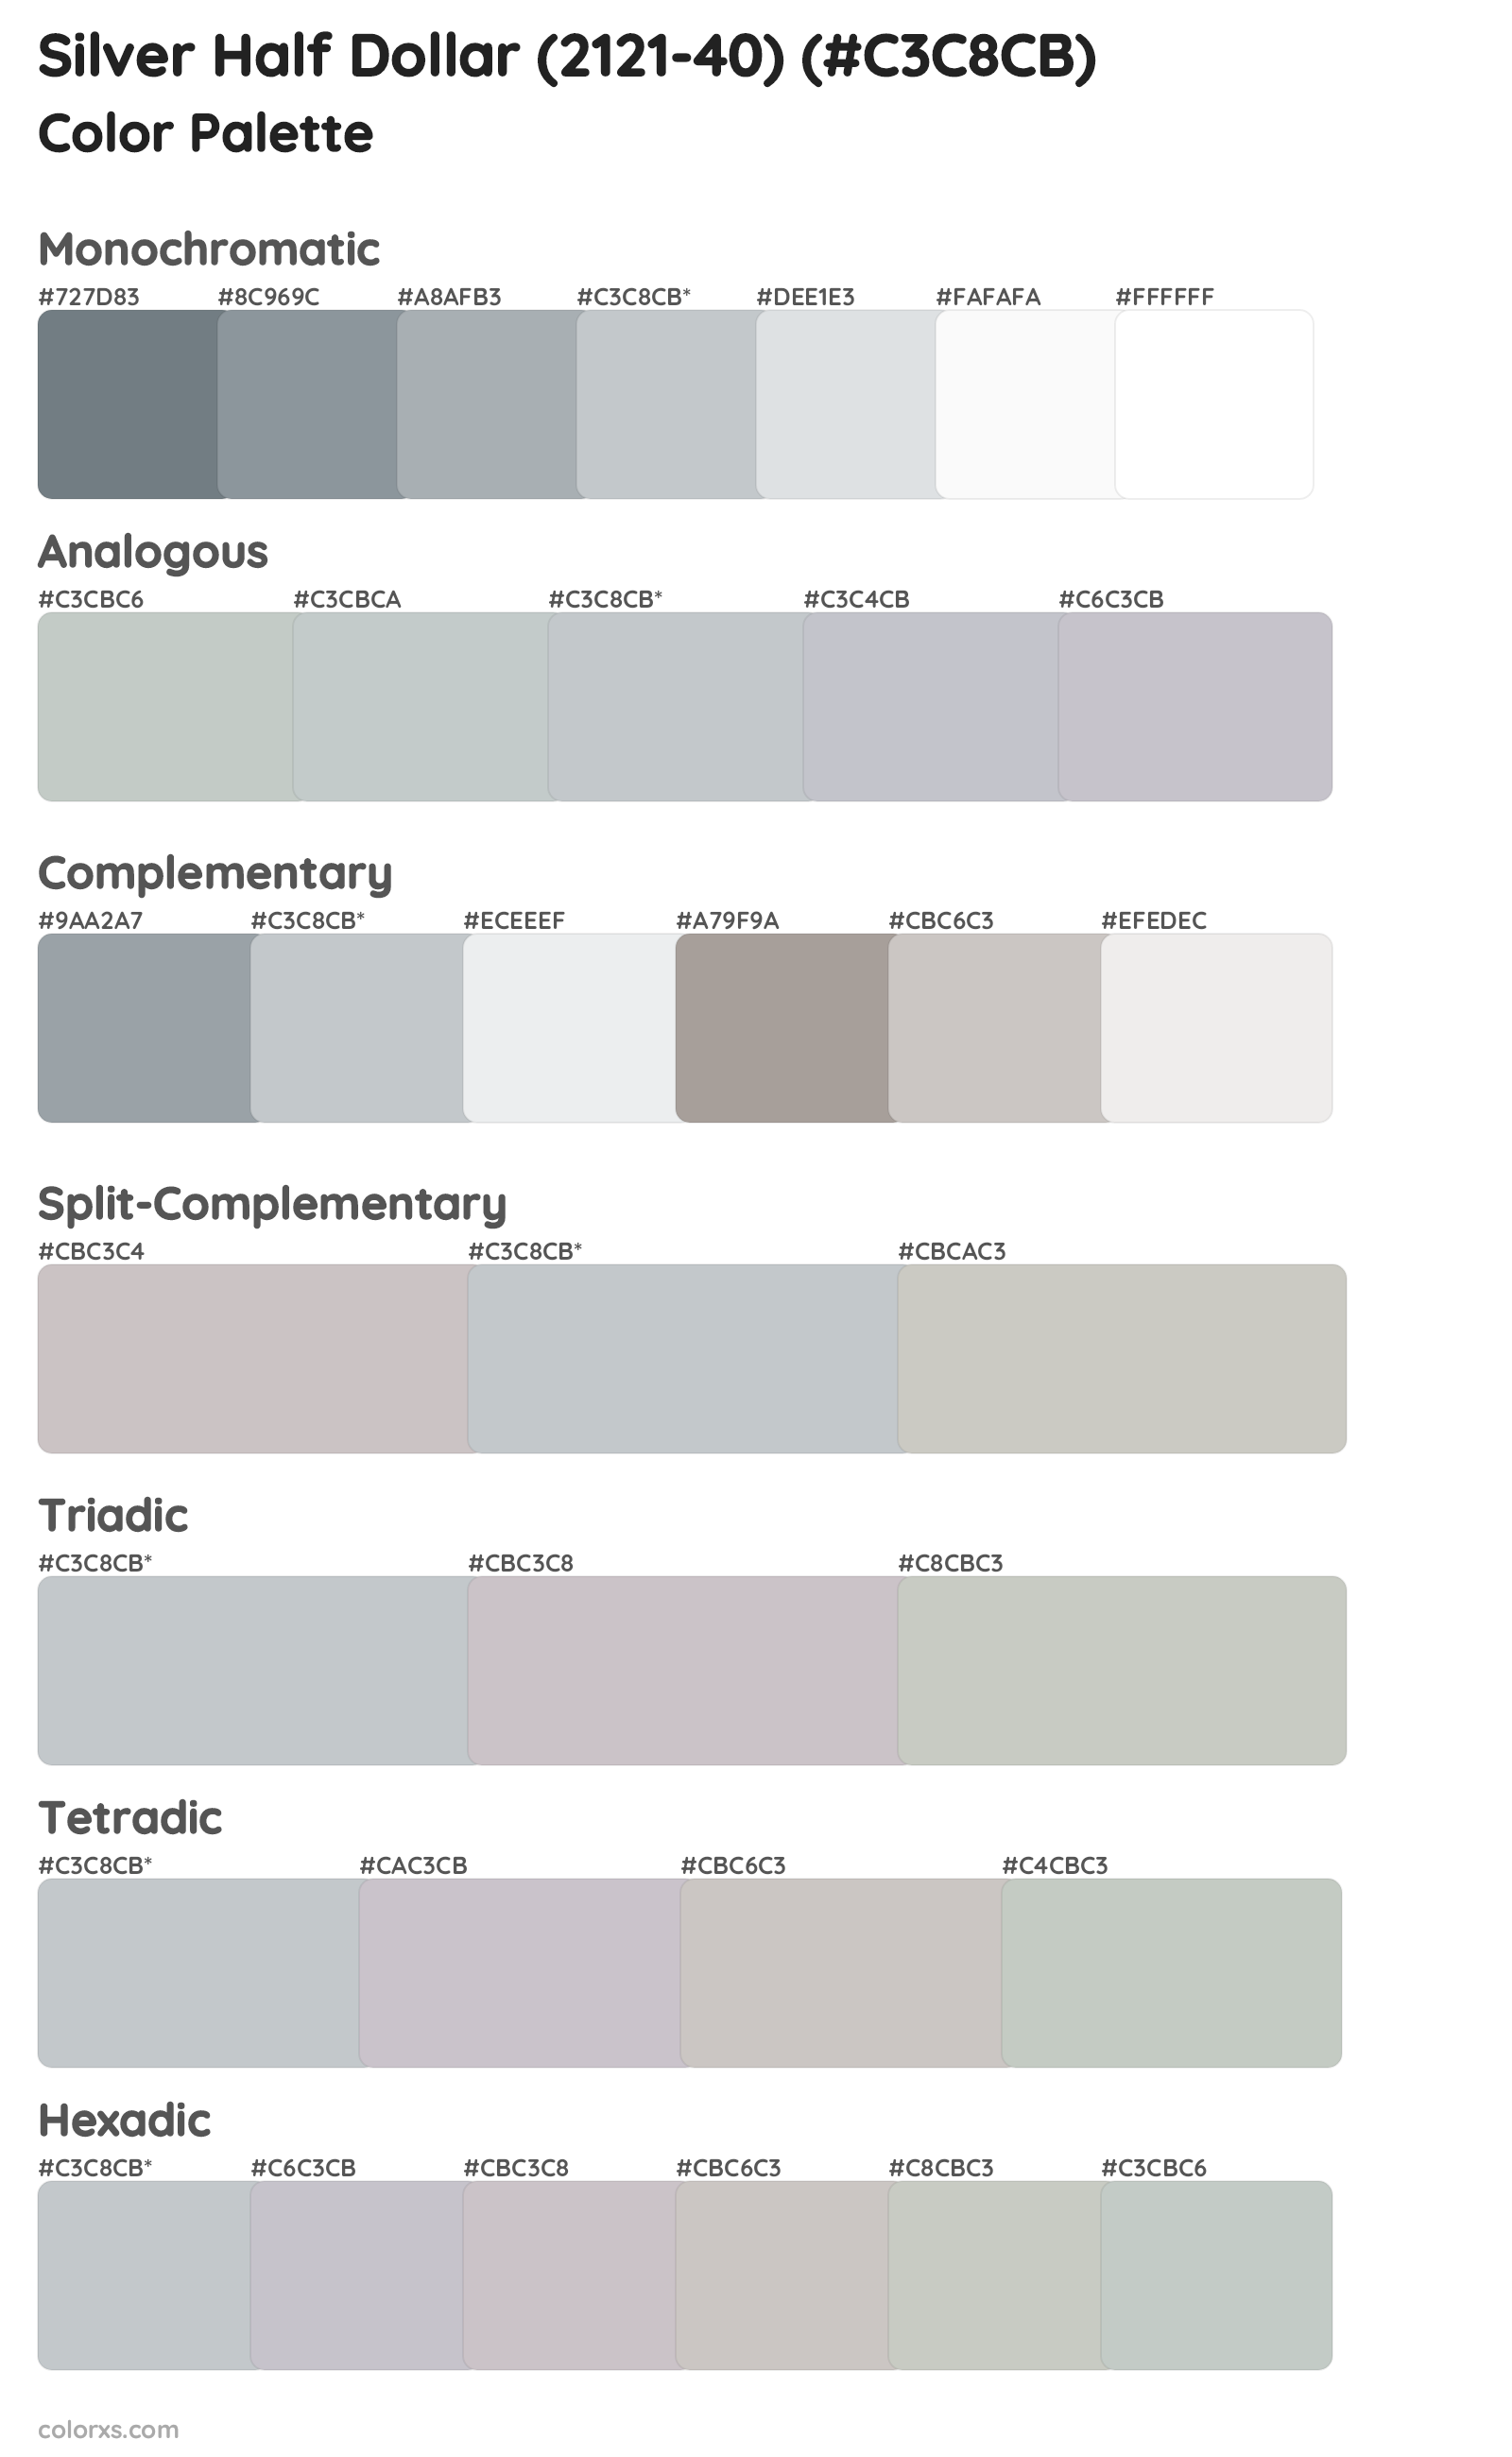 Silver Half Dollar (2121-40) Color Scheme Palettes